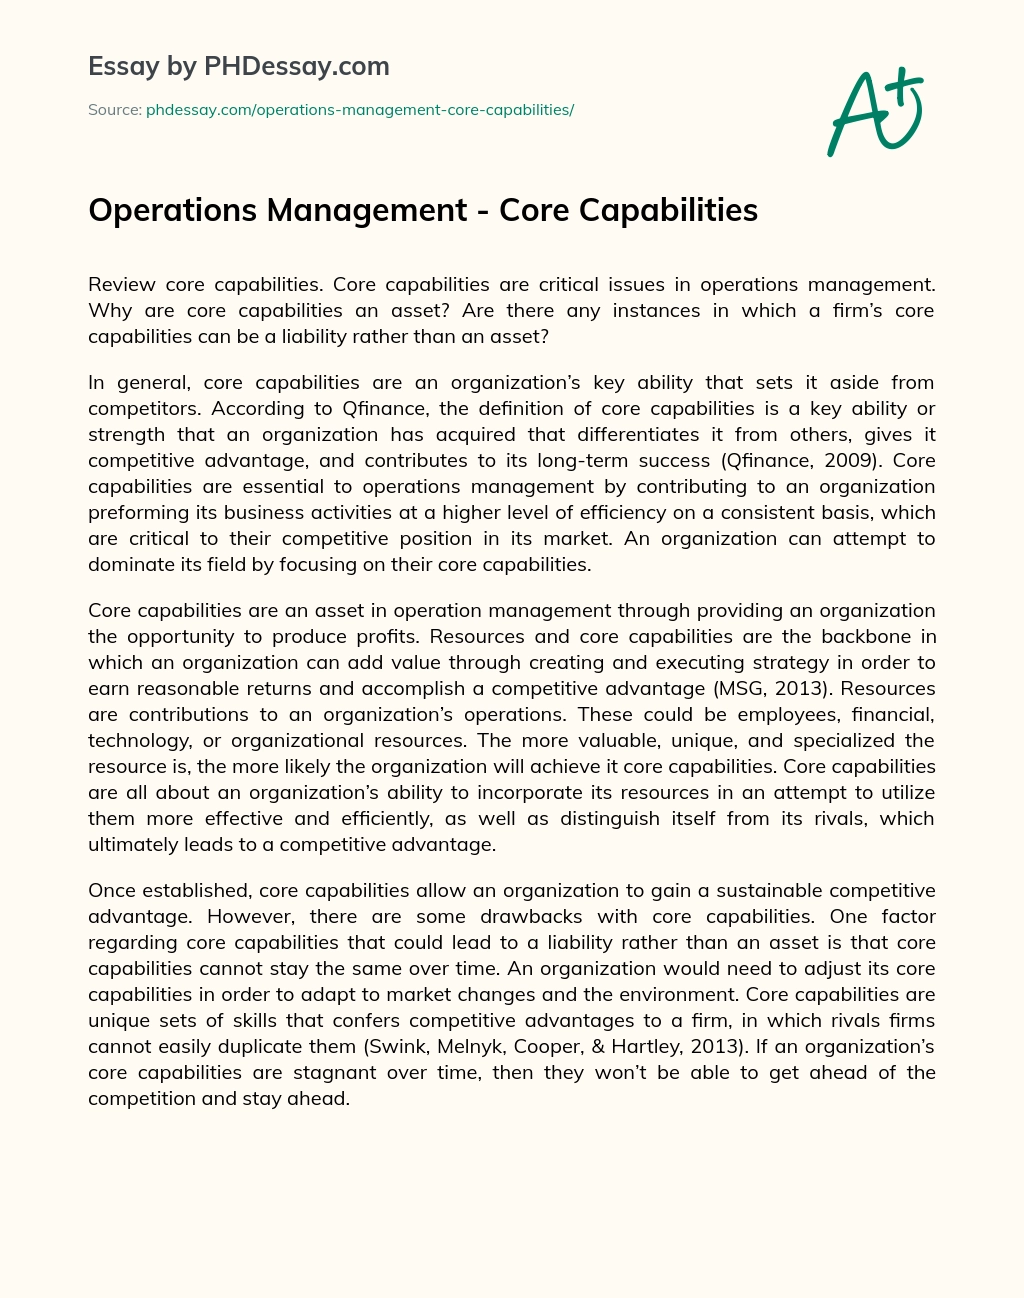 Operations Management – Core Capabilities essay